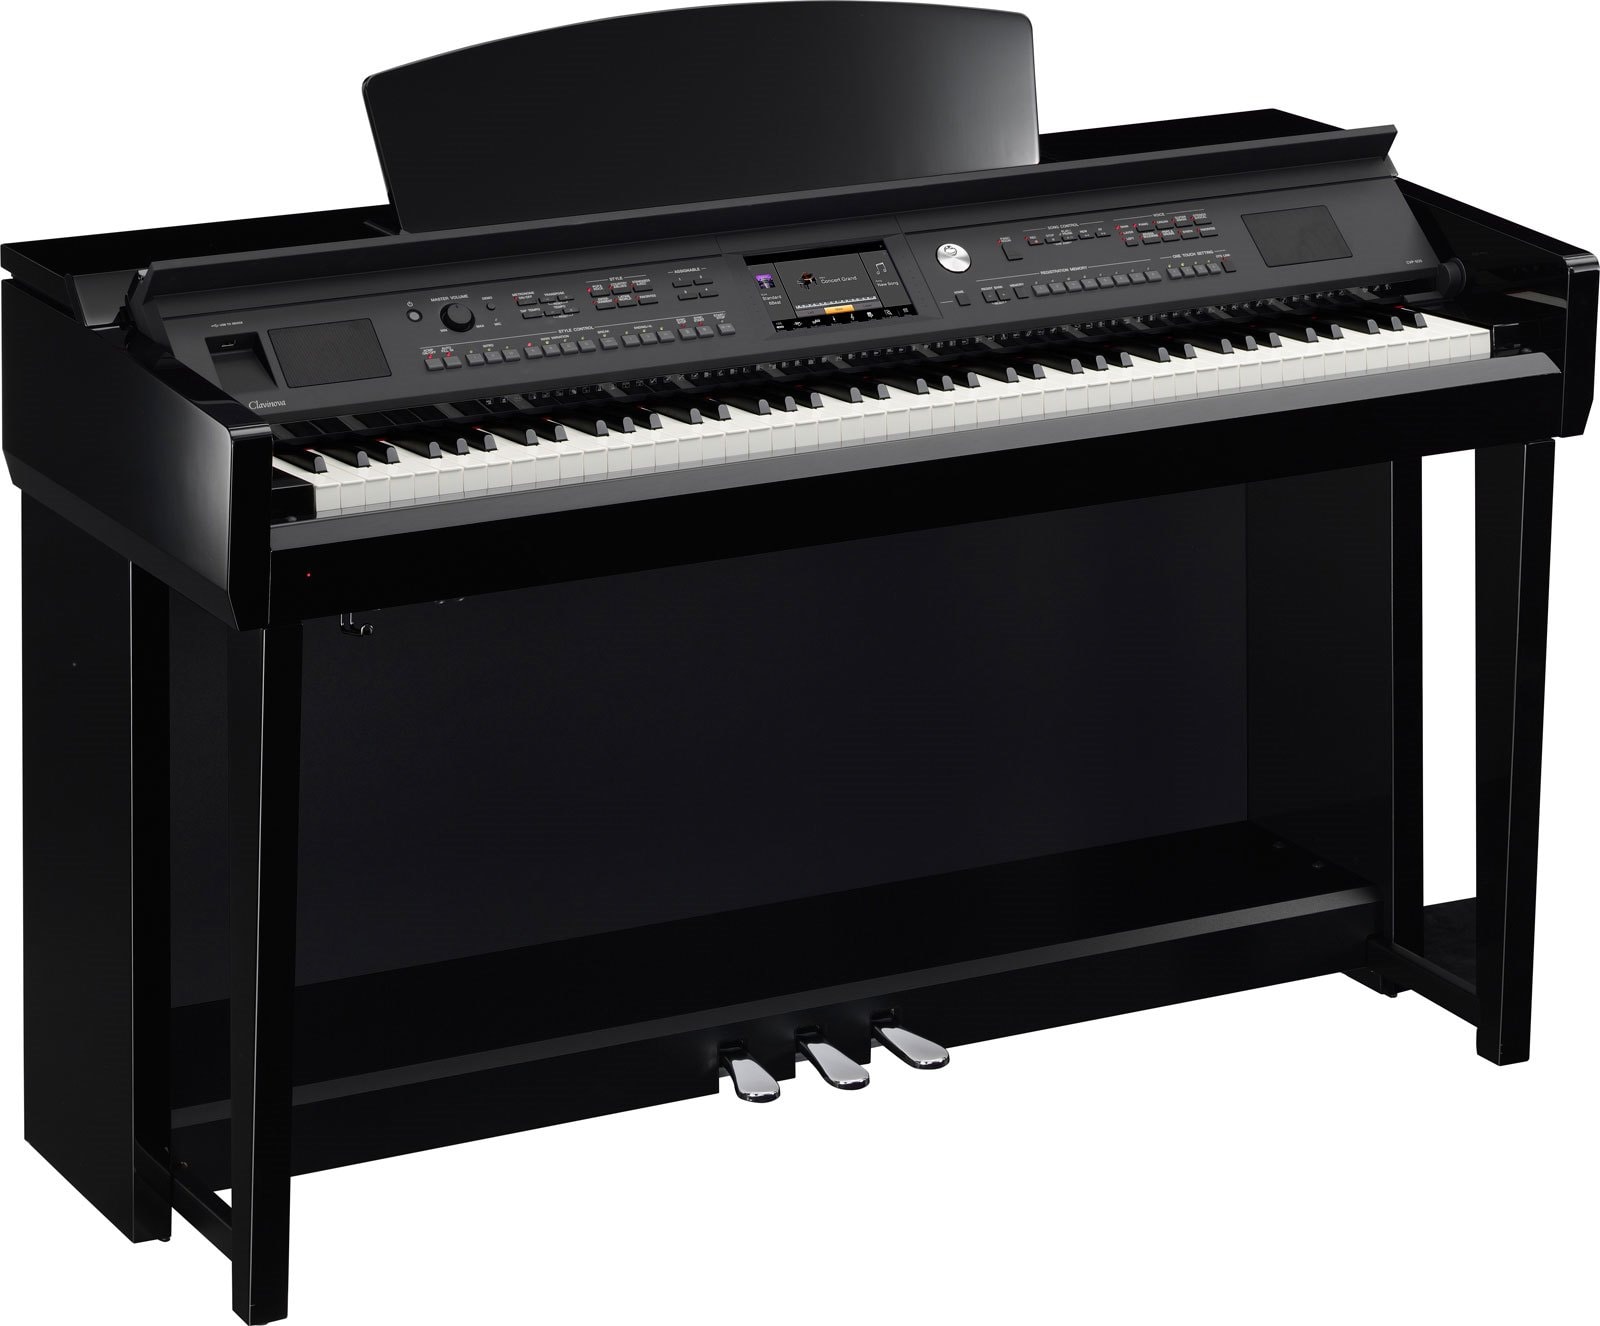 Imperativo deberes Dormitorio CVP-605 Digital Piano - Overview - Clavinova - Pianos - Musical Instruments  - Products - Yamaha - United States